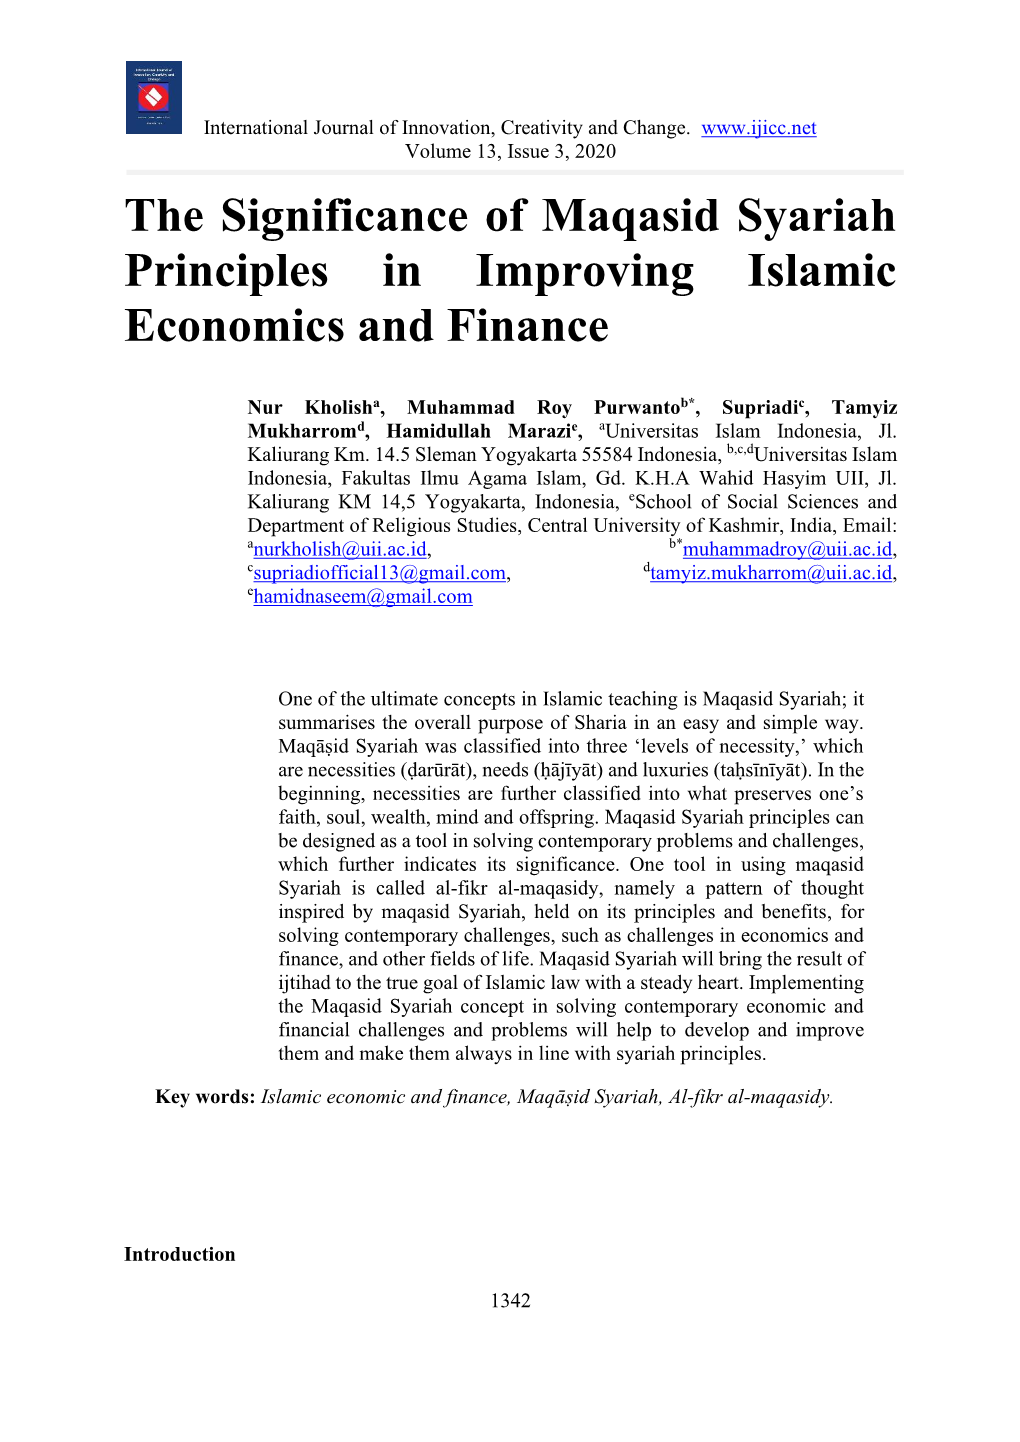 The Significance of Maqasid Syariah Principles in Improving Islamic Economics and Finance